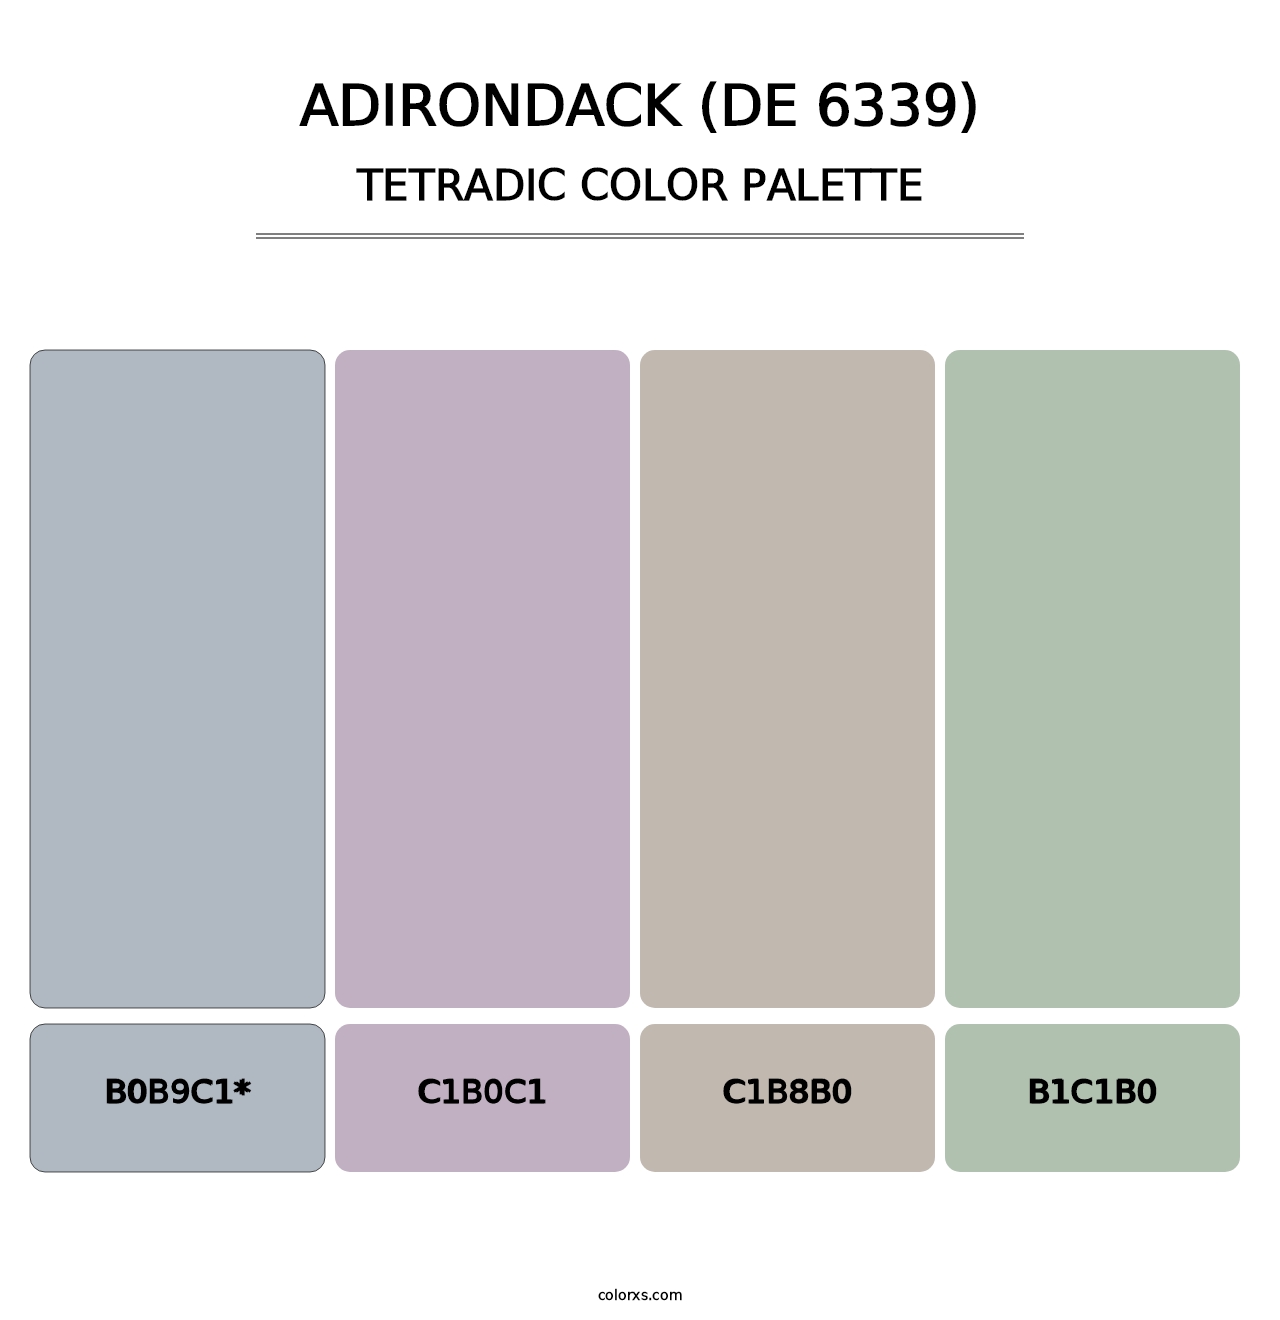 Adirondack (DE 6339) - Tetradic Color Palette